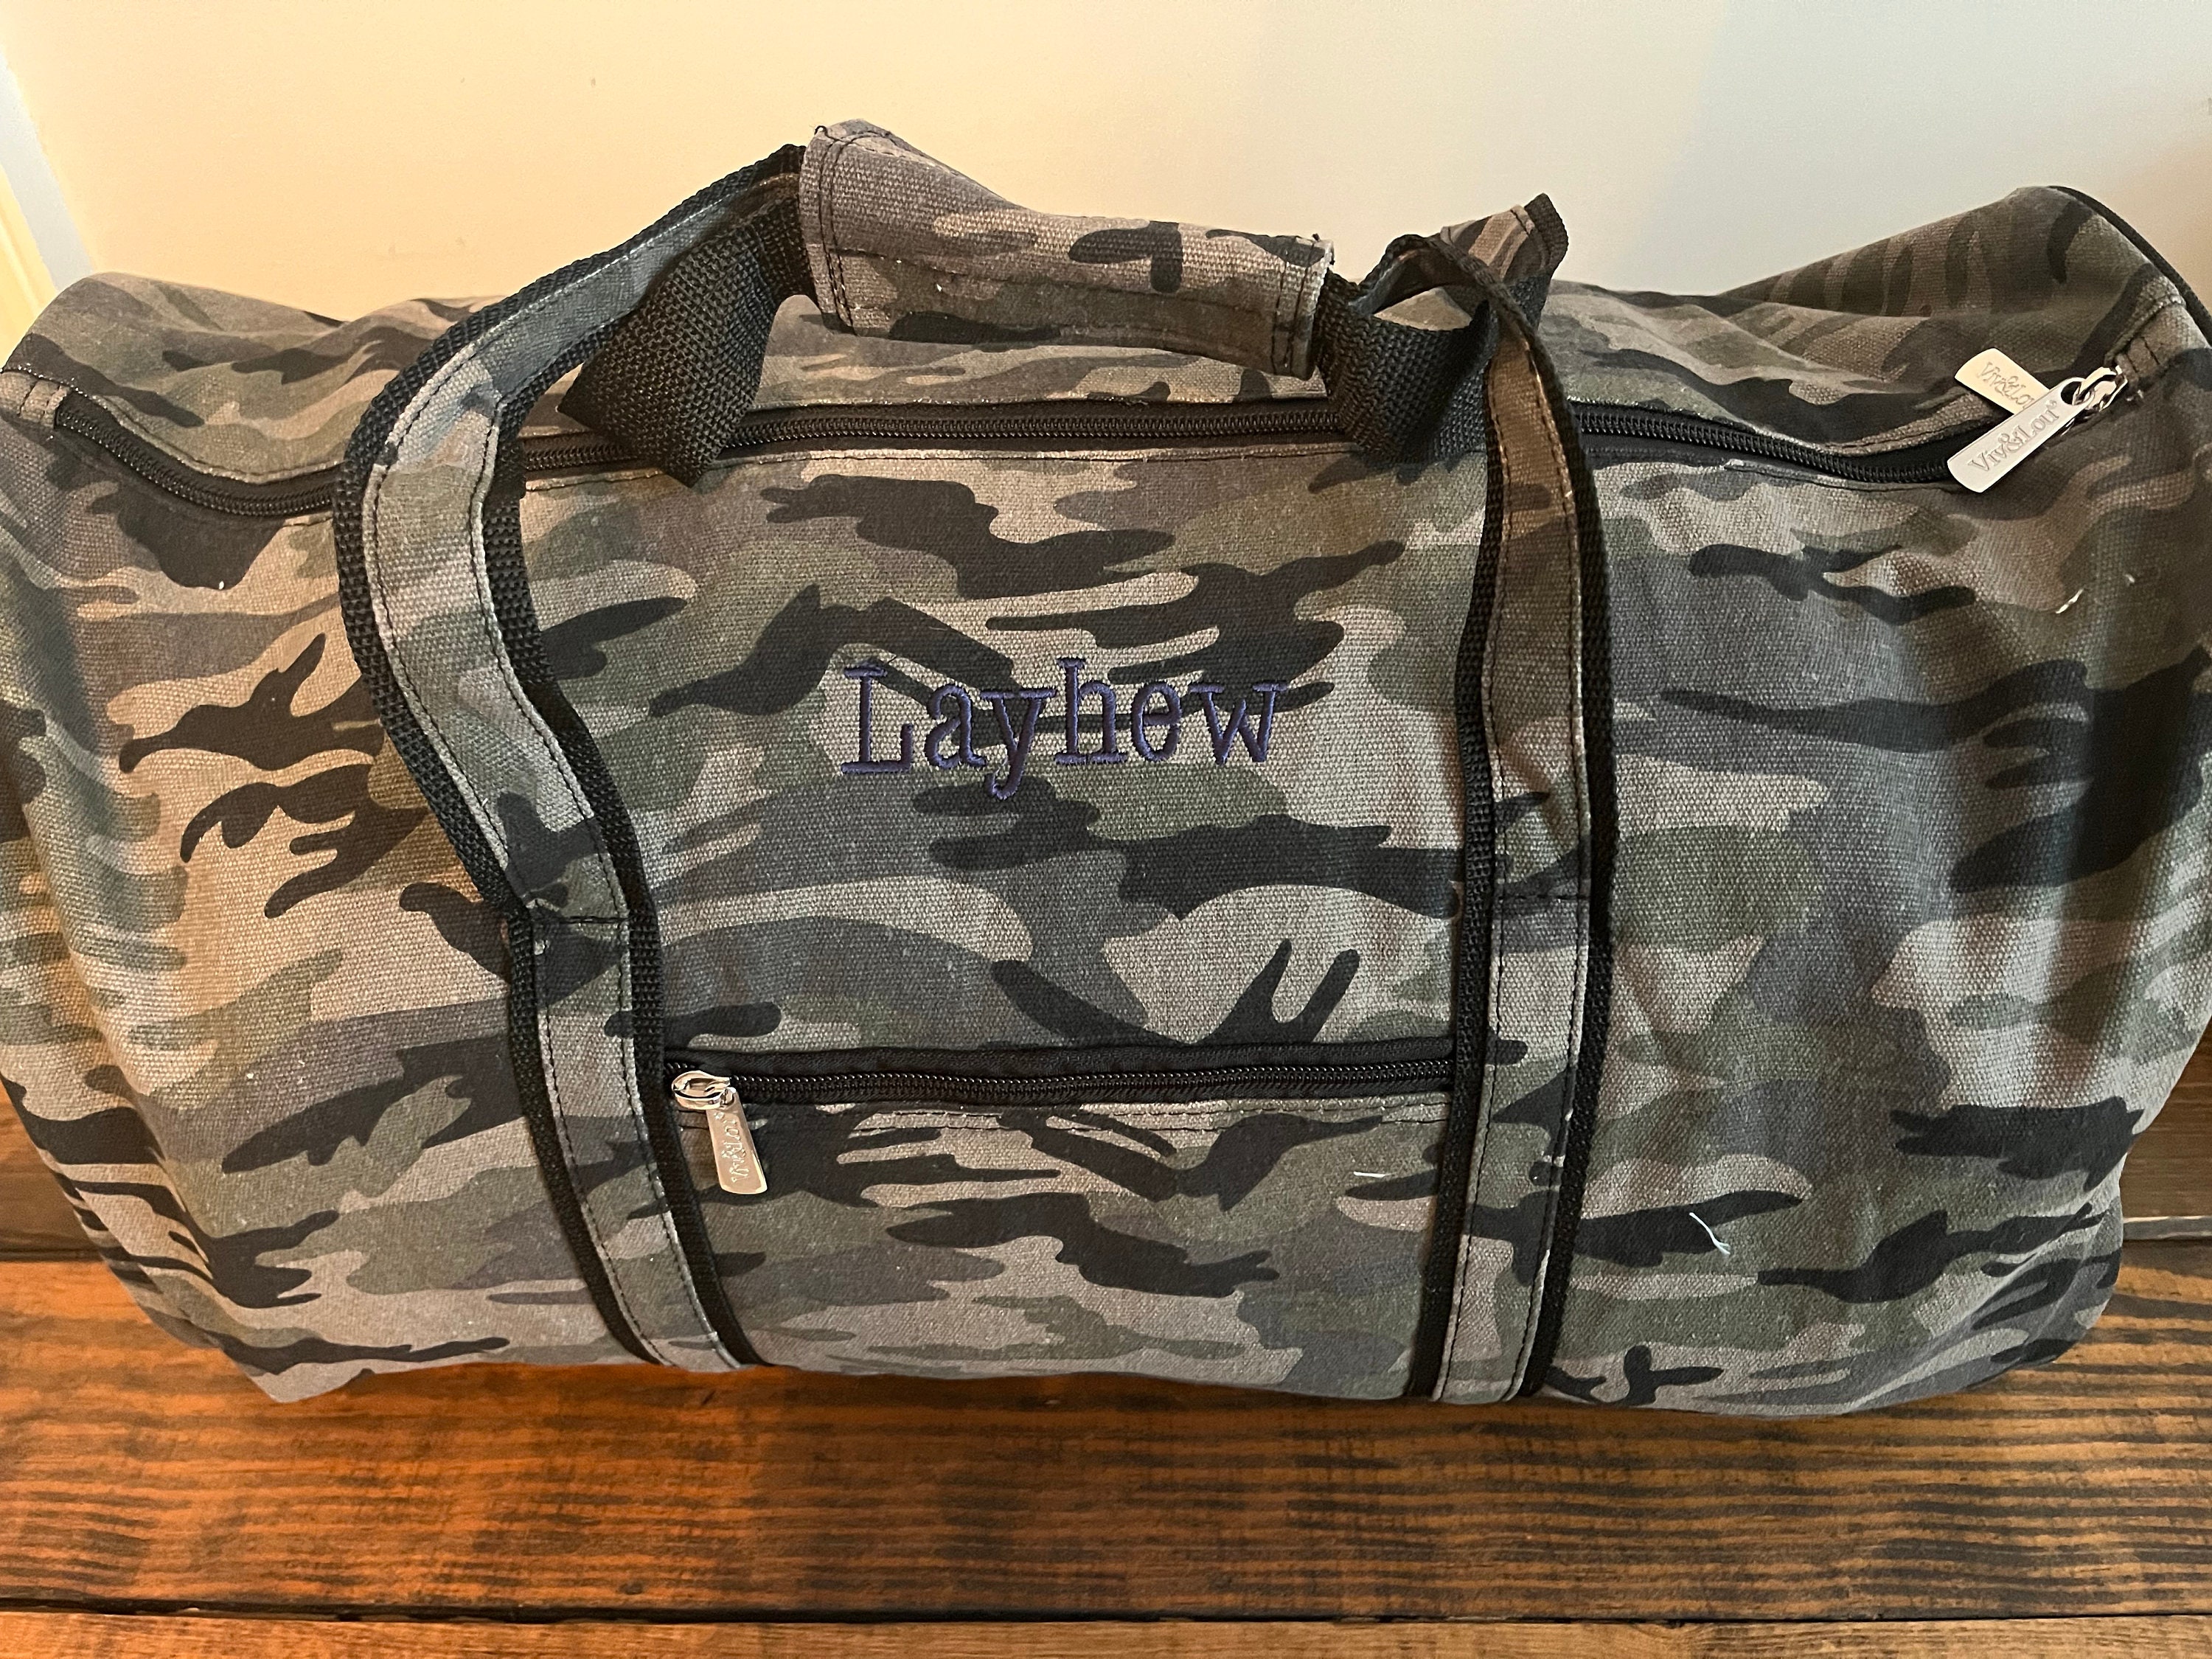 Camouflage Gray Travel Duffle Bag for Men Women